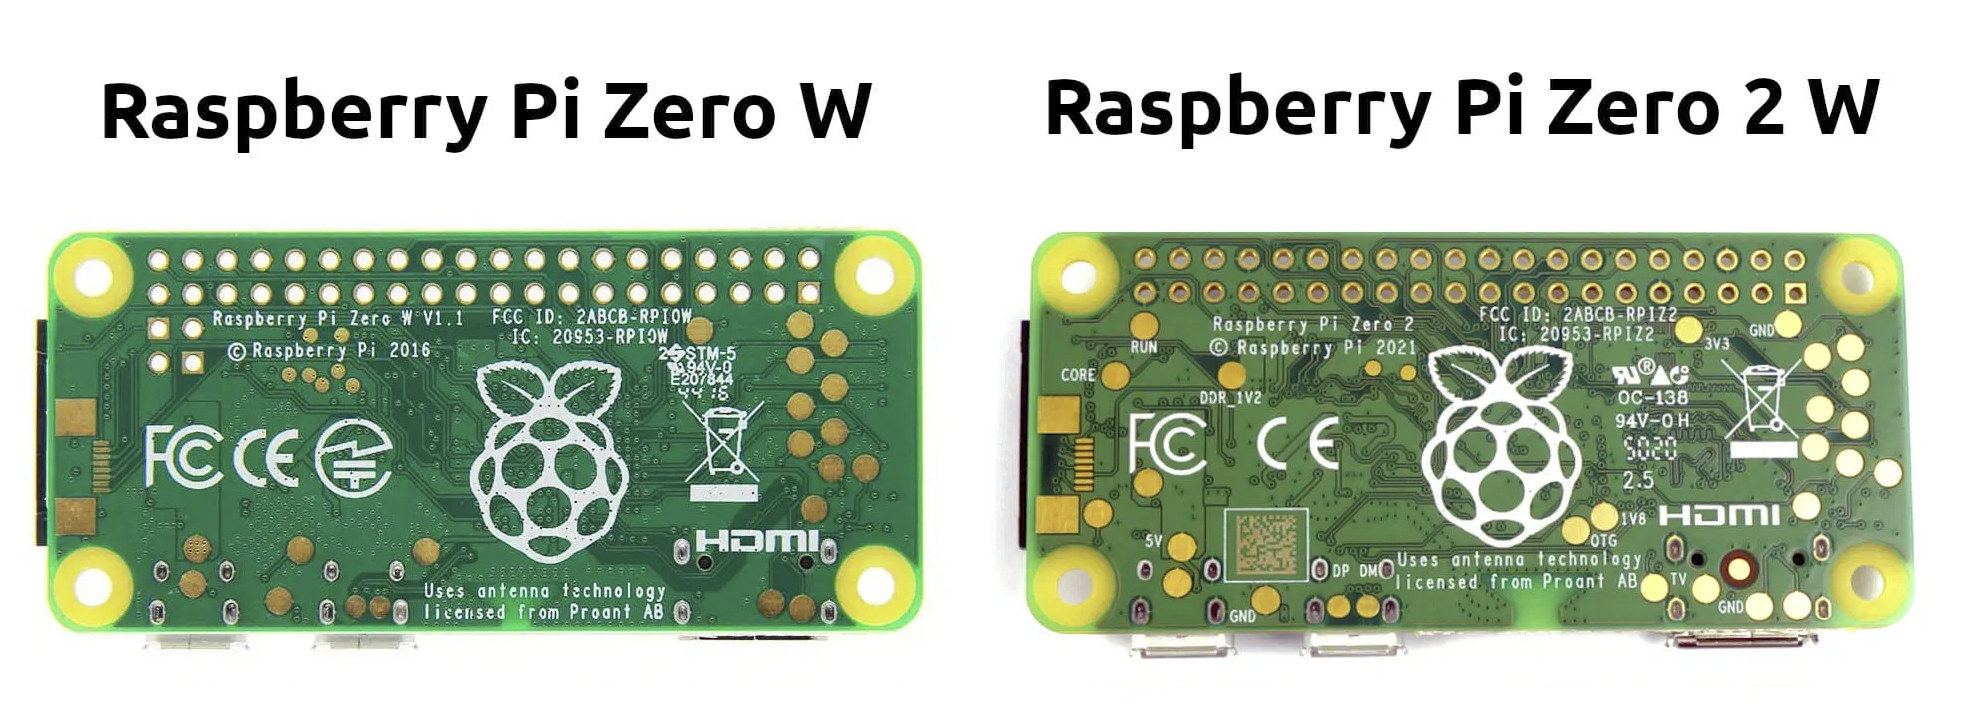 USB add-on boards leverage Raspberry Pi Zero test pads, USB Gadget